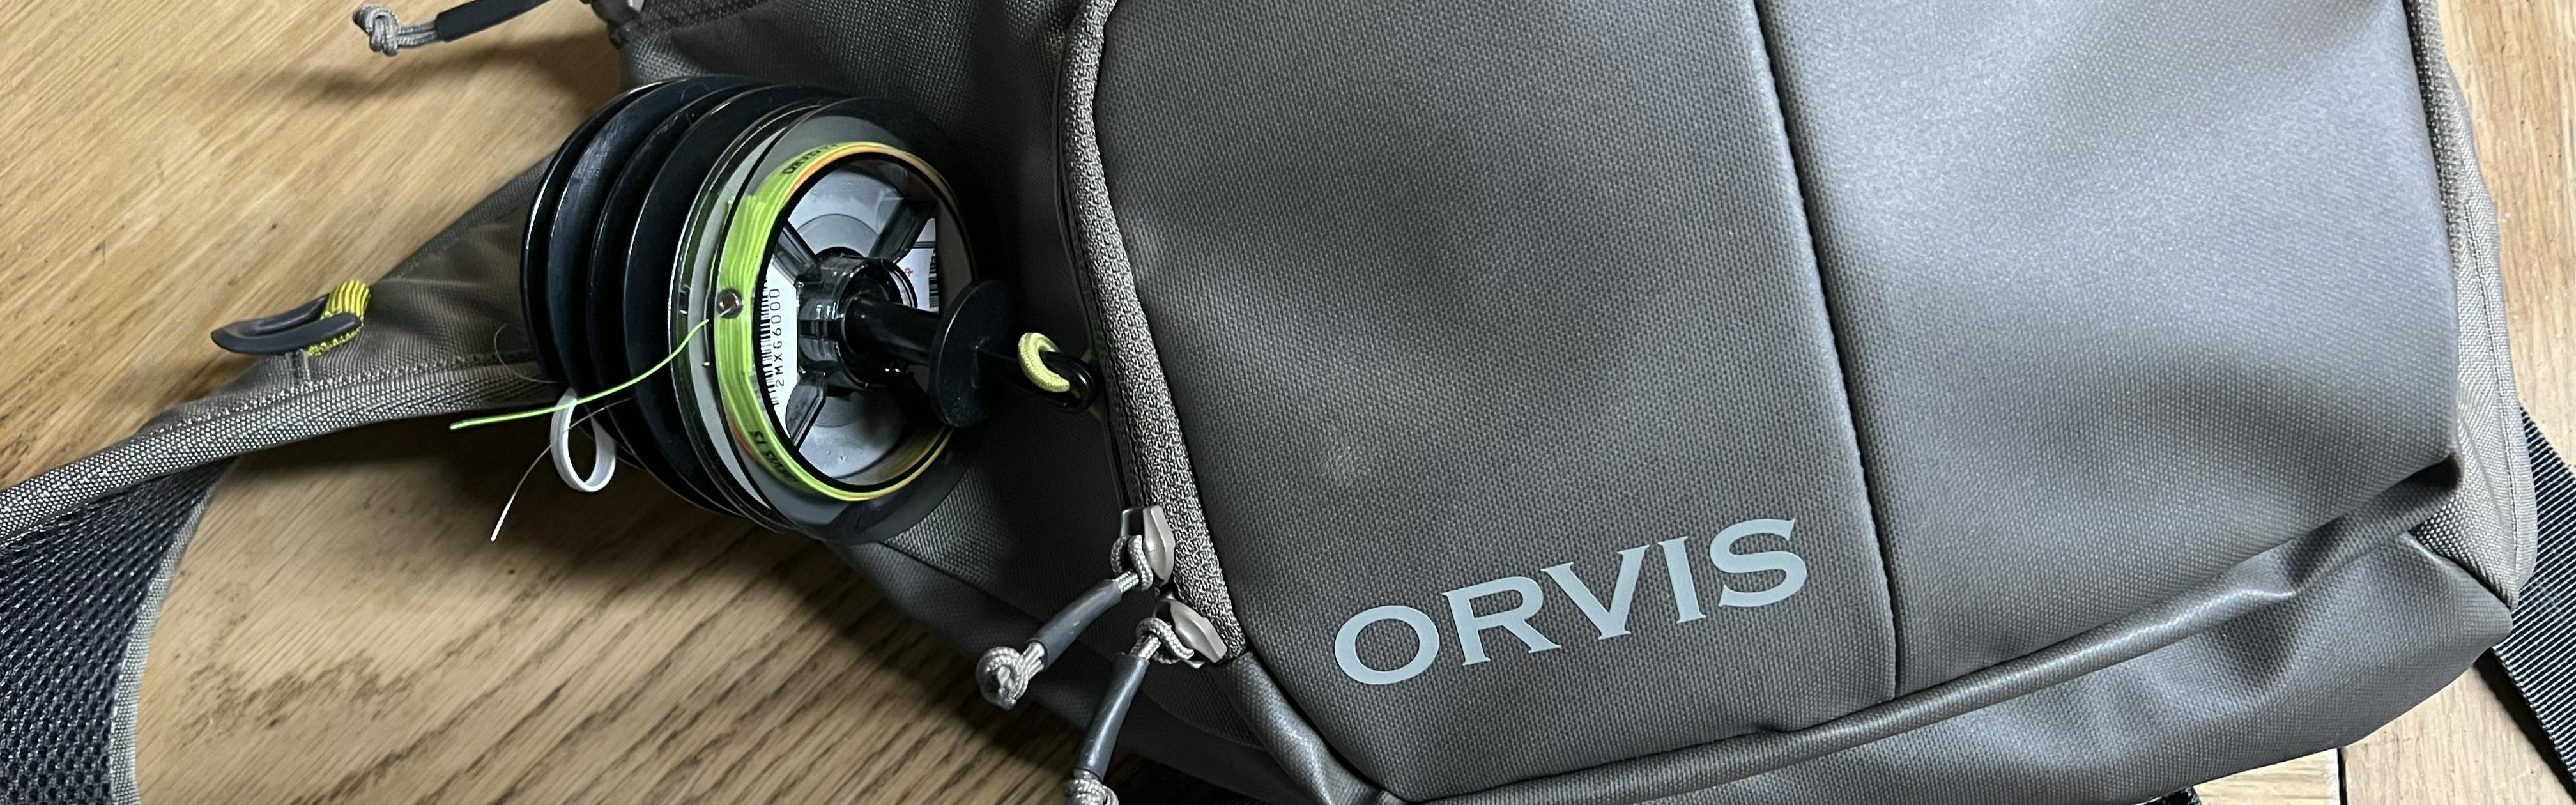 Expert Review: Orvis Sling Pack